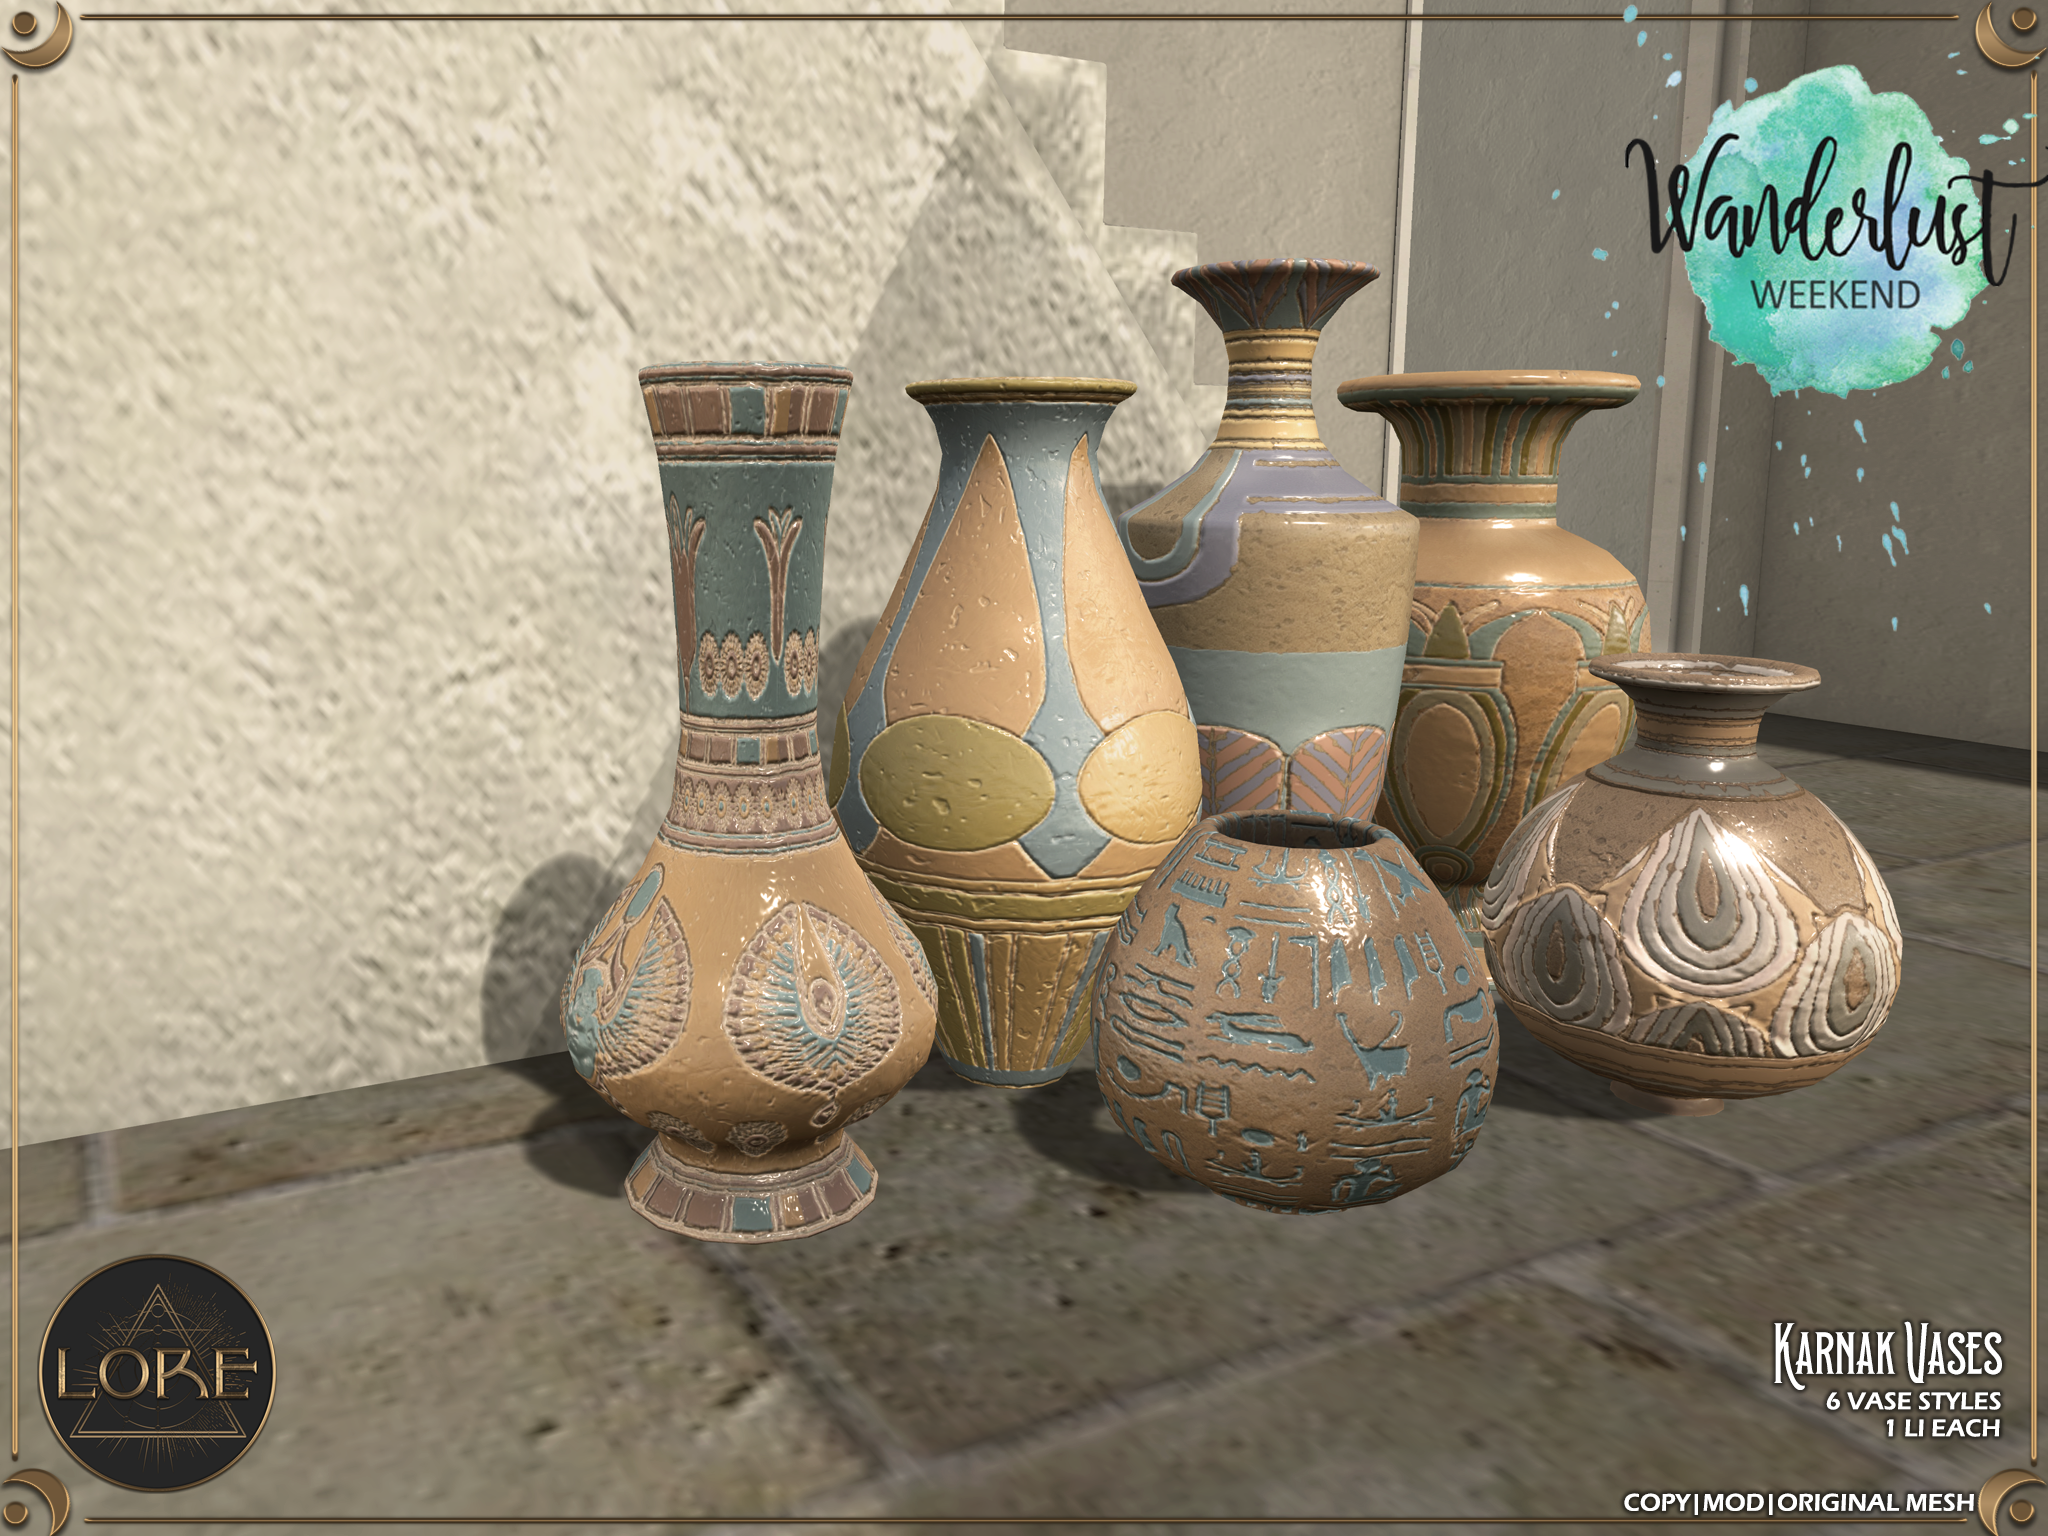 Lore – Karnak and Luxor Vases